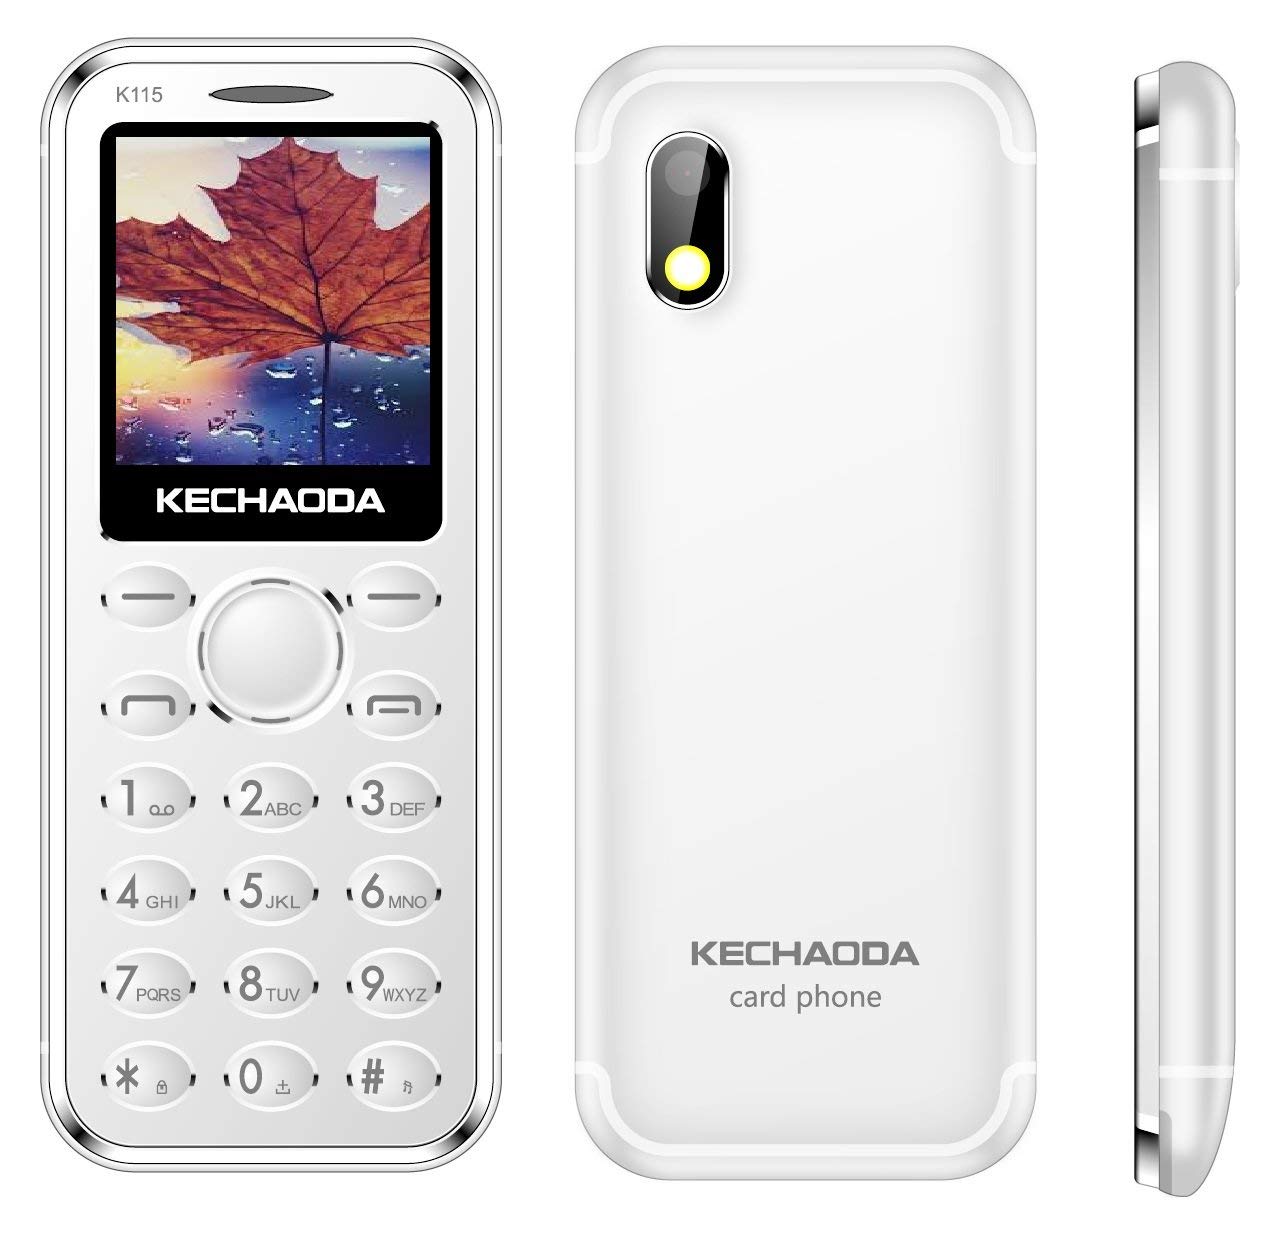 KECHAODA K115 Mini Card Phone Images